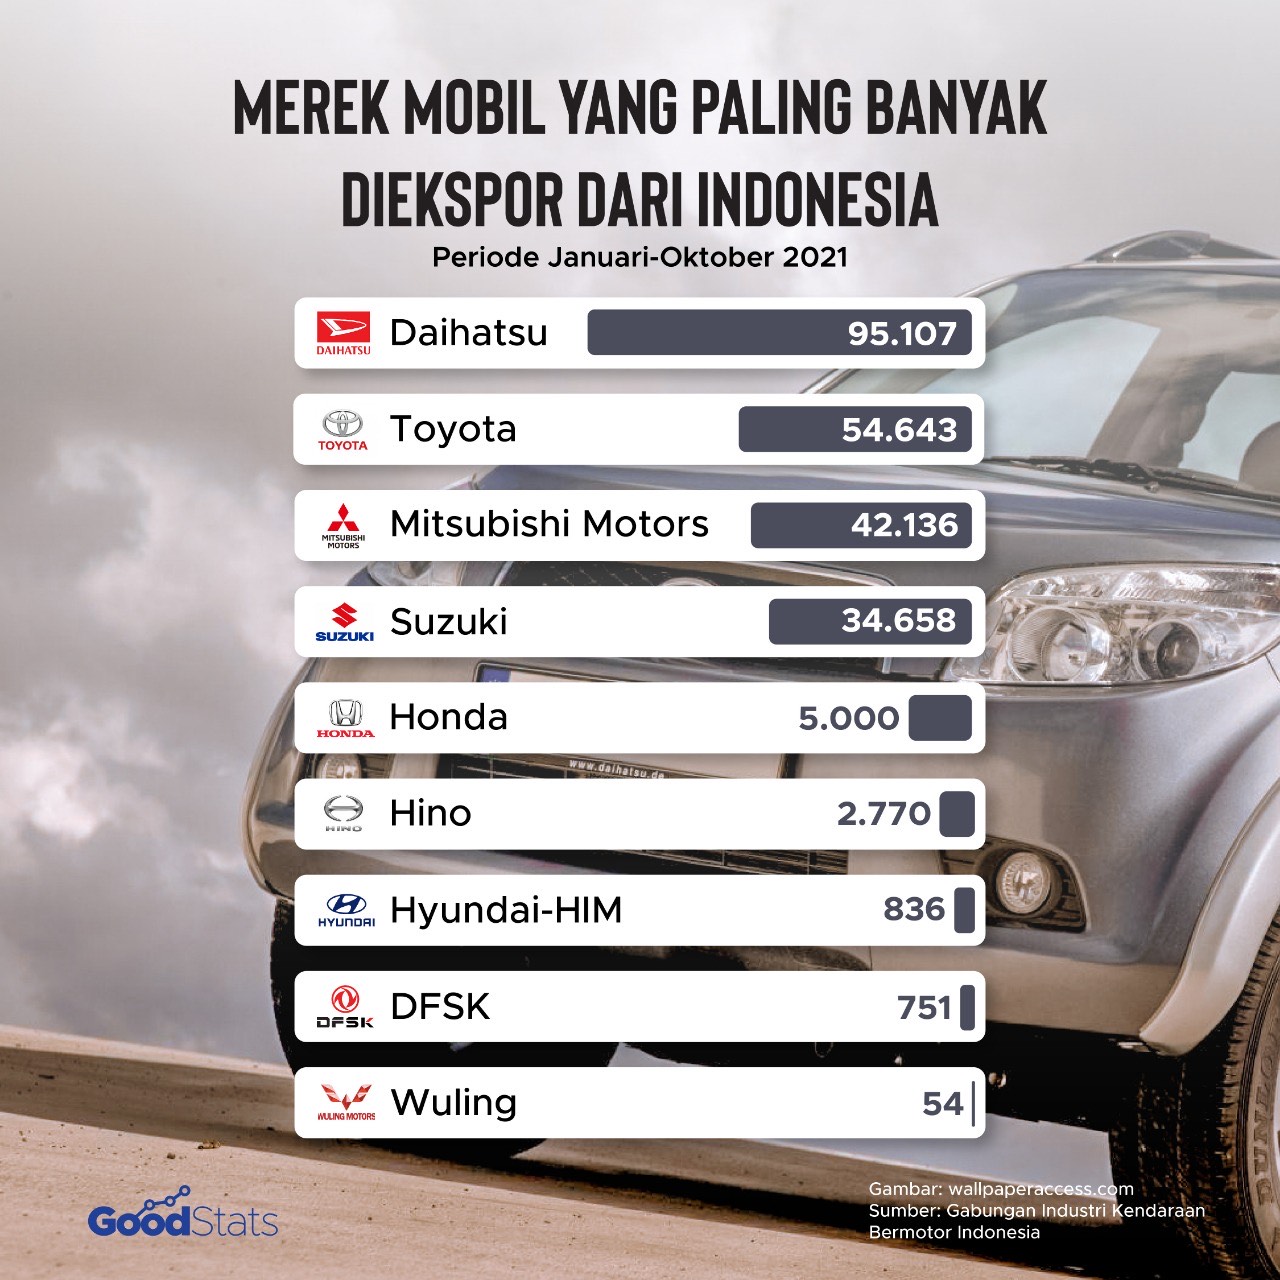 Merek mobil yang paling banyak diekspor dari Indonesia sepanjang Januari-Oktober 2021. Daihatsu masih menguasai, sementara dua pabrikan China (DFSK dan Wuling) juga masuk daftar. | GoodStats